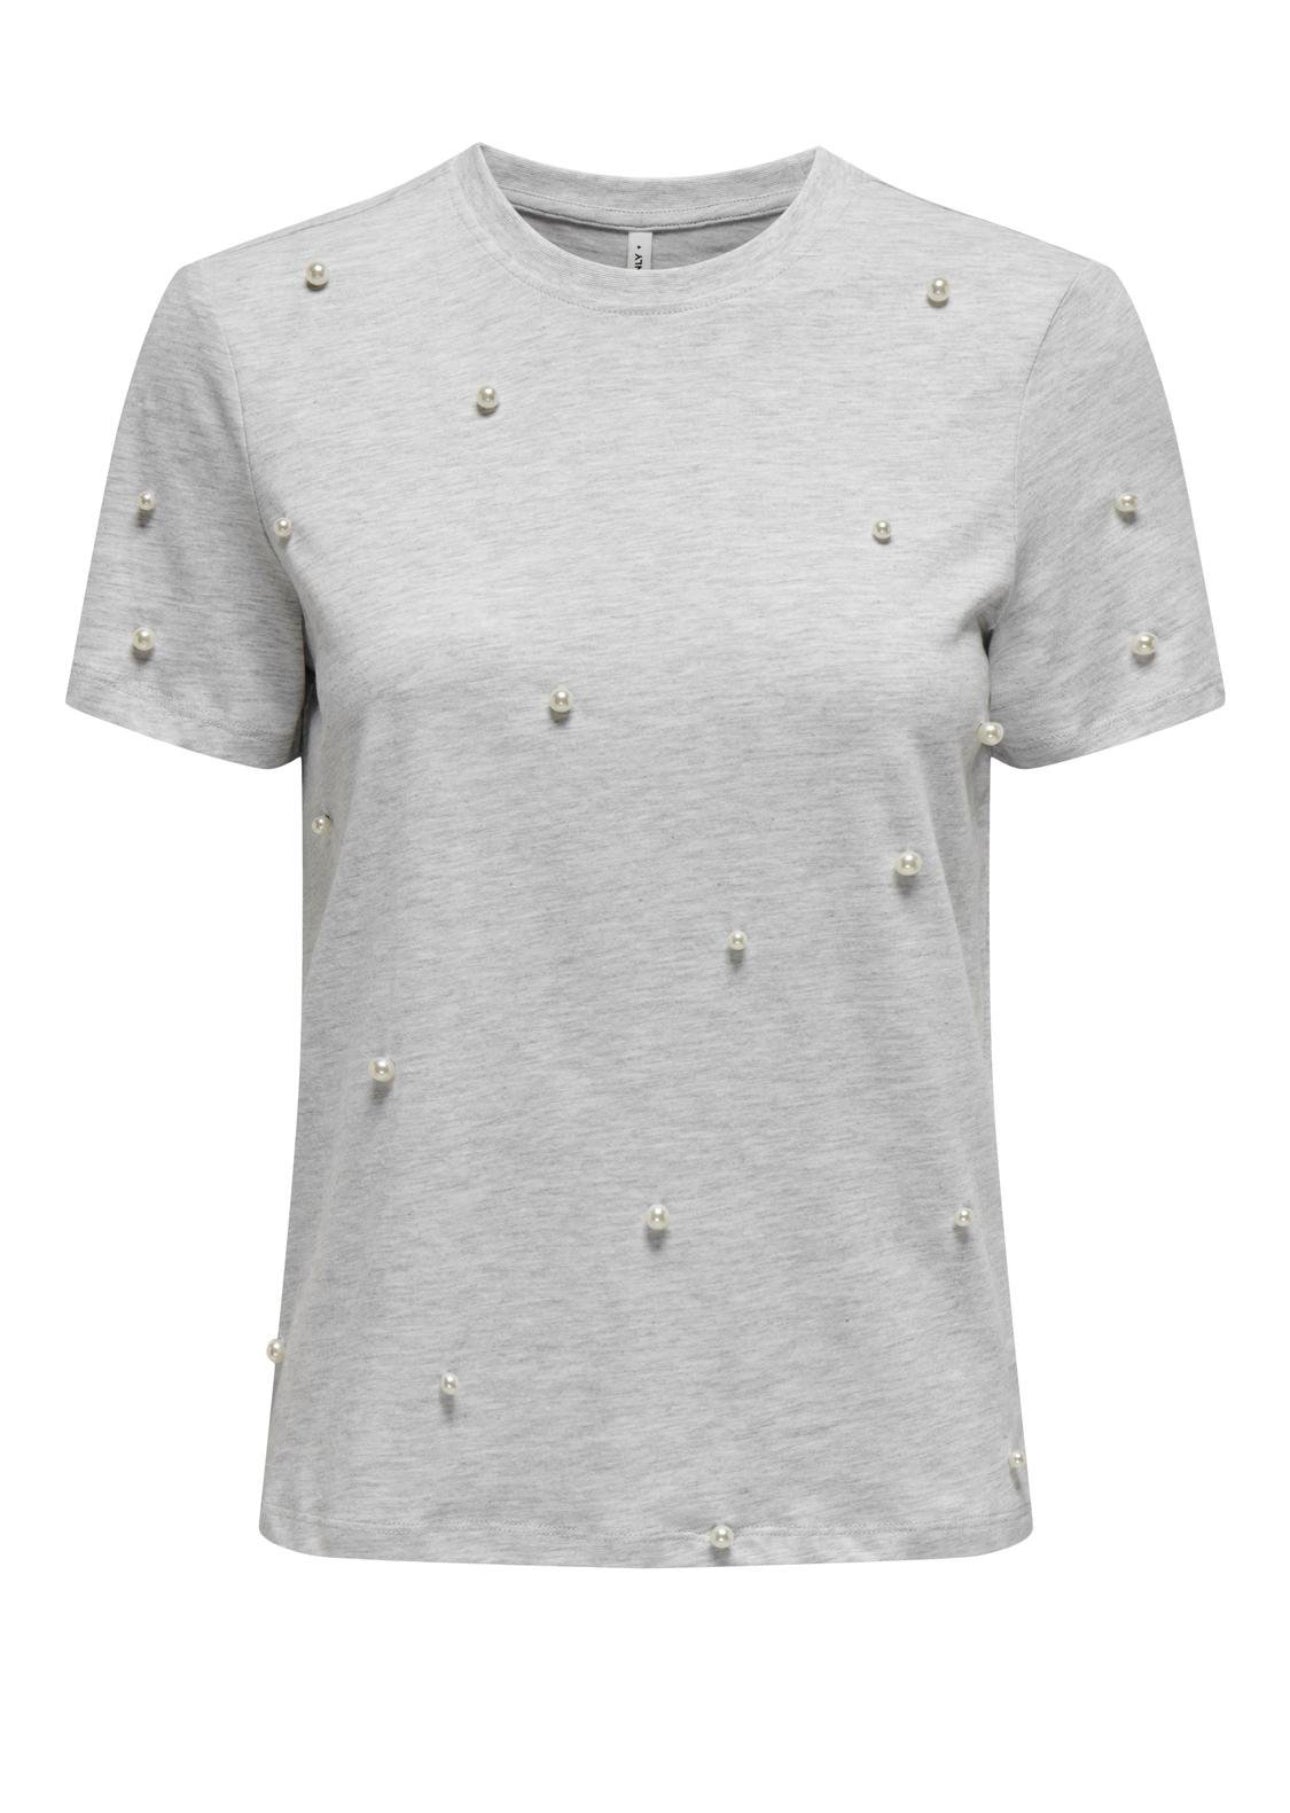 T-shirt olivia gris avec perles